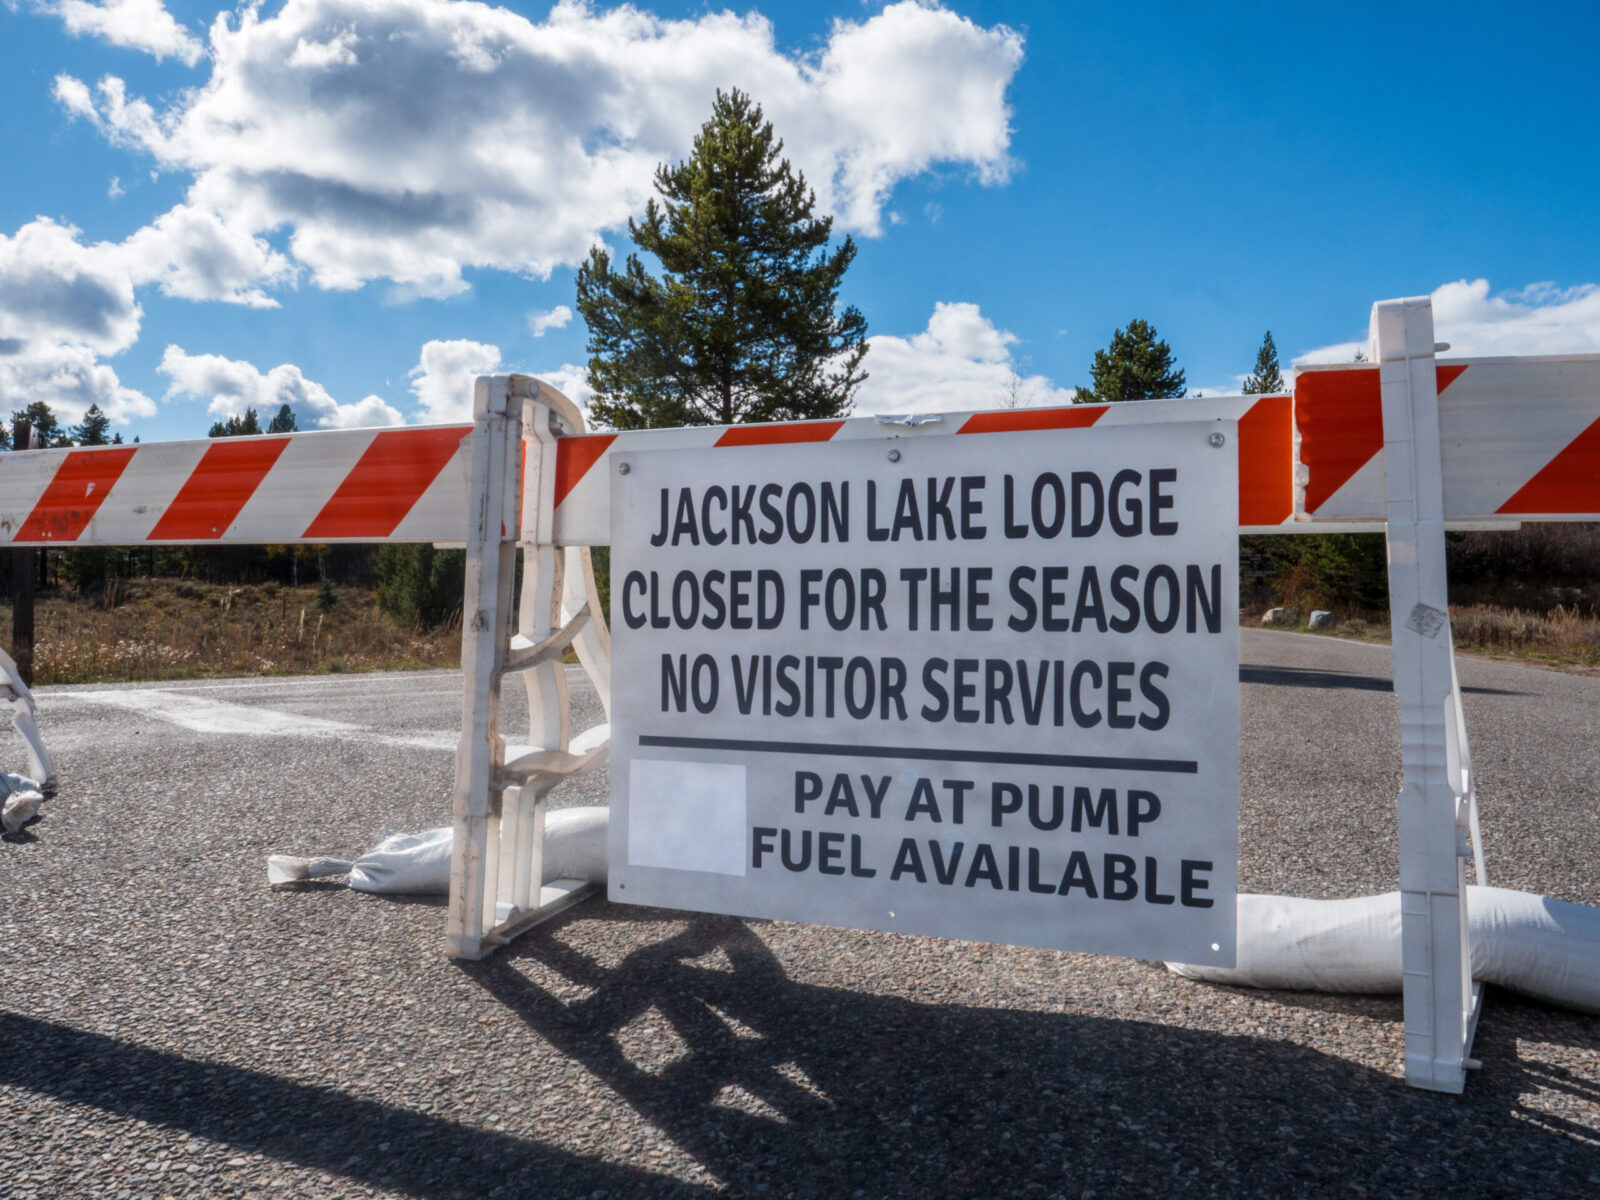 Jackson Lake Lodge closes for the season.